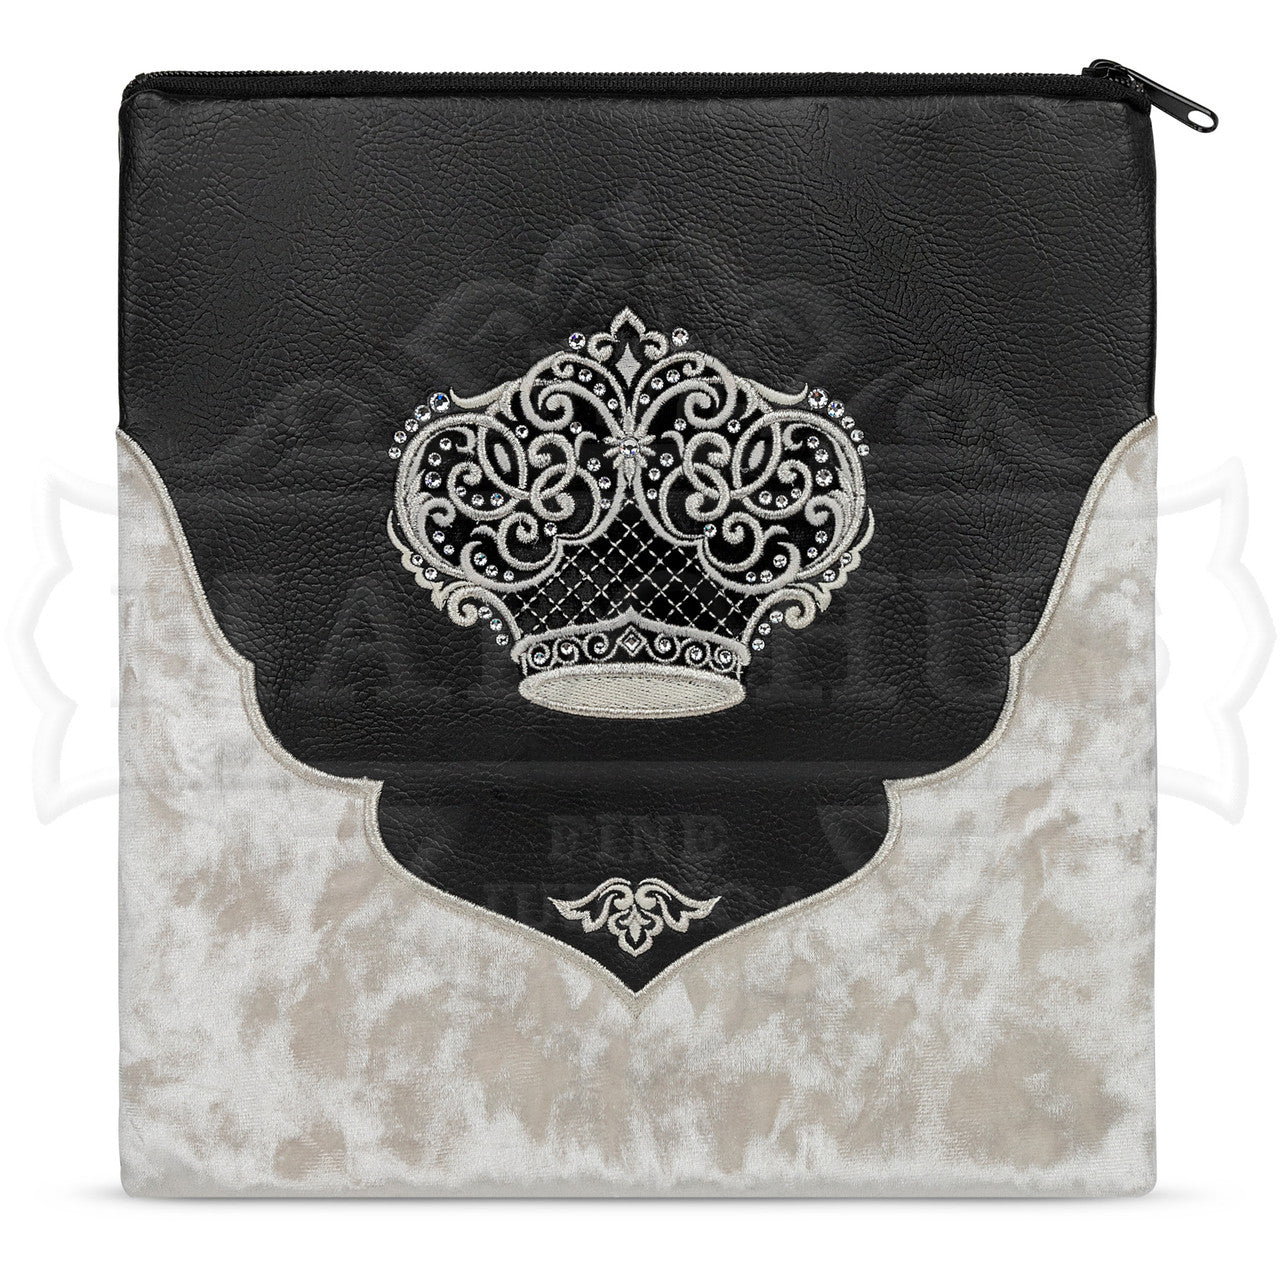 Bag #569 Black Faux Leather & White Crushed Velvet